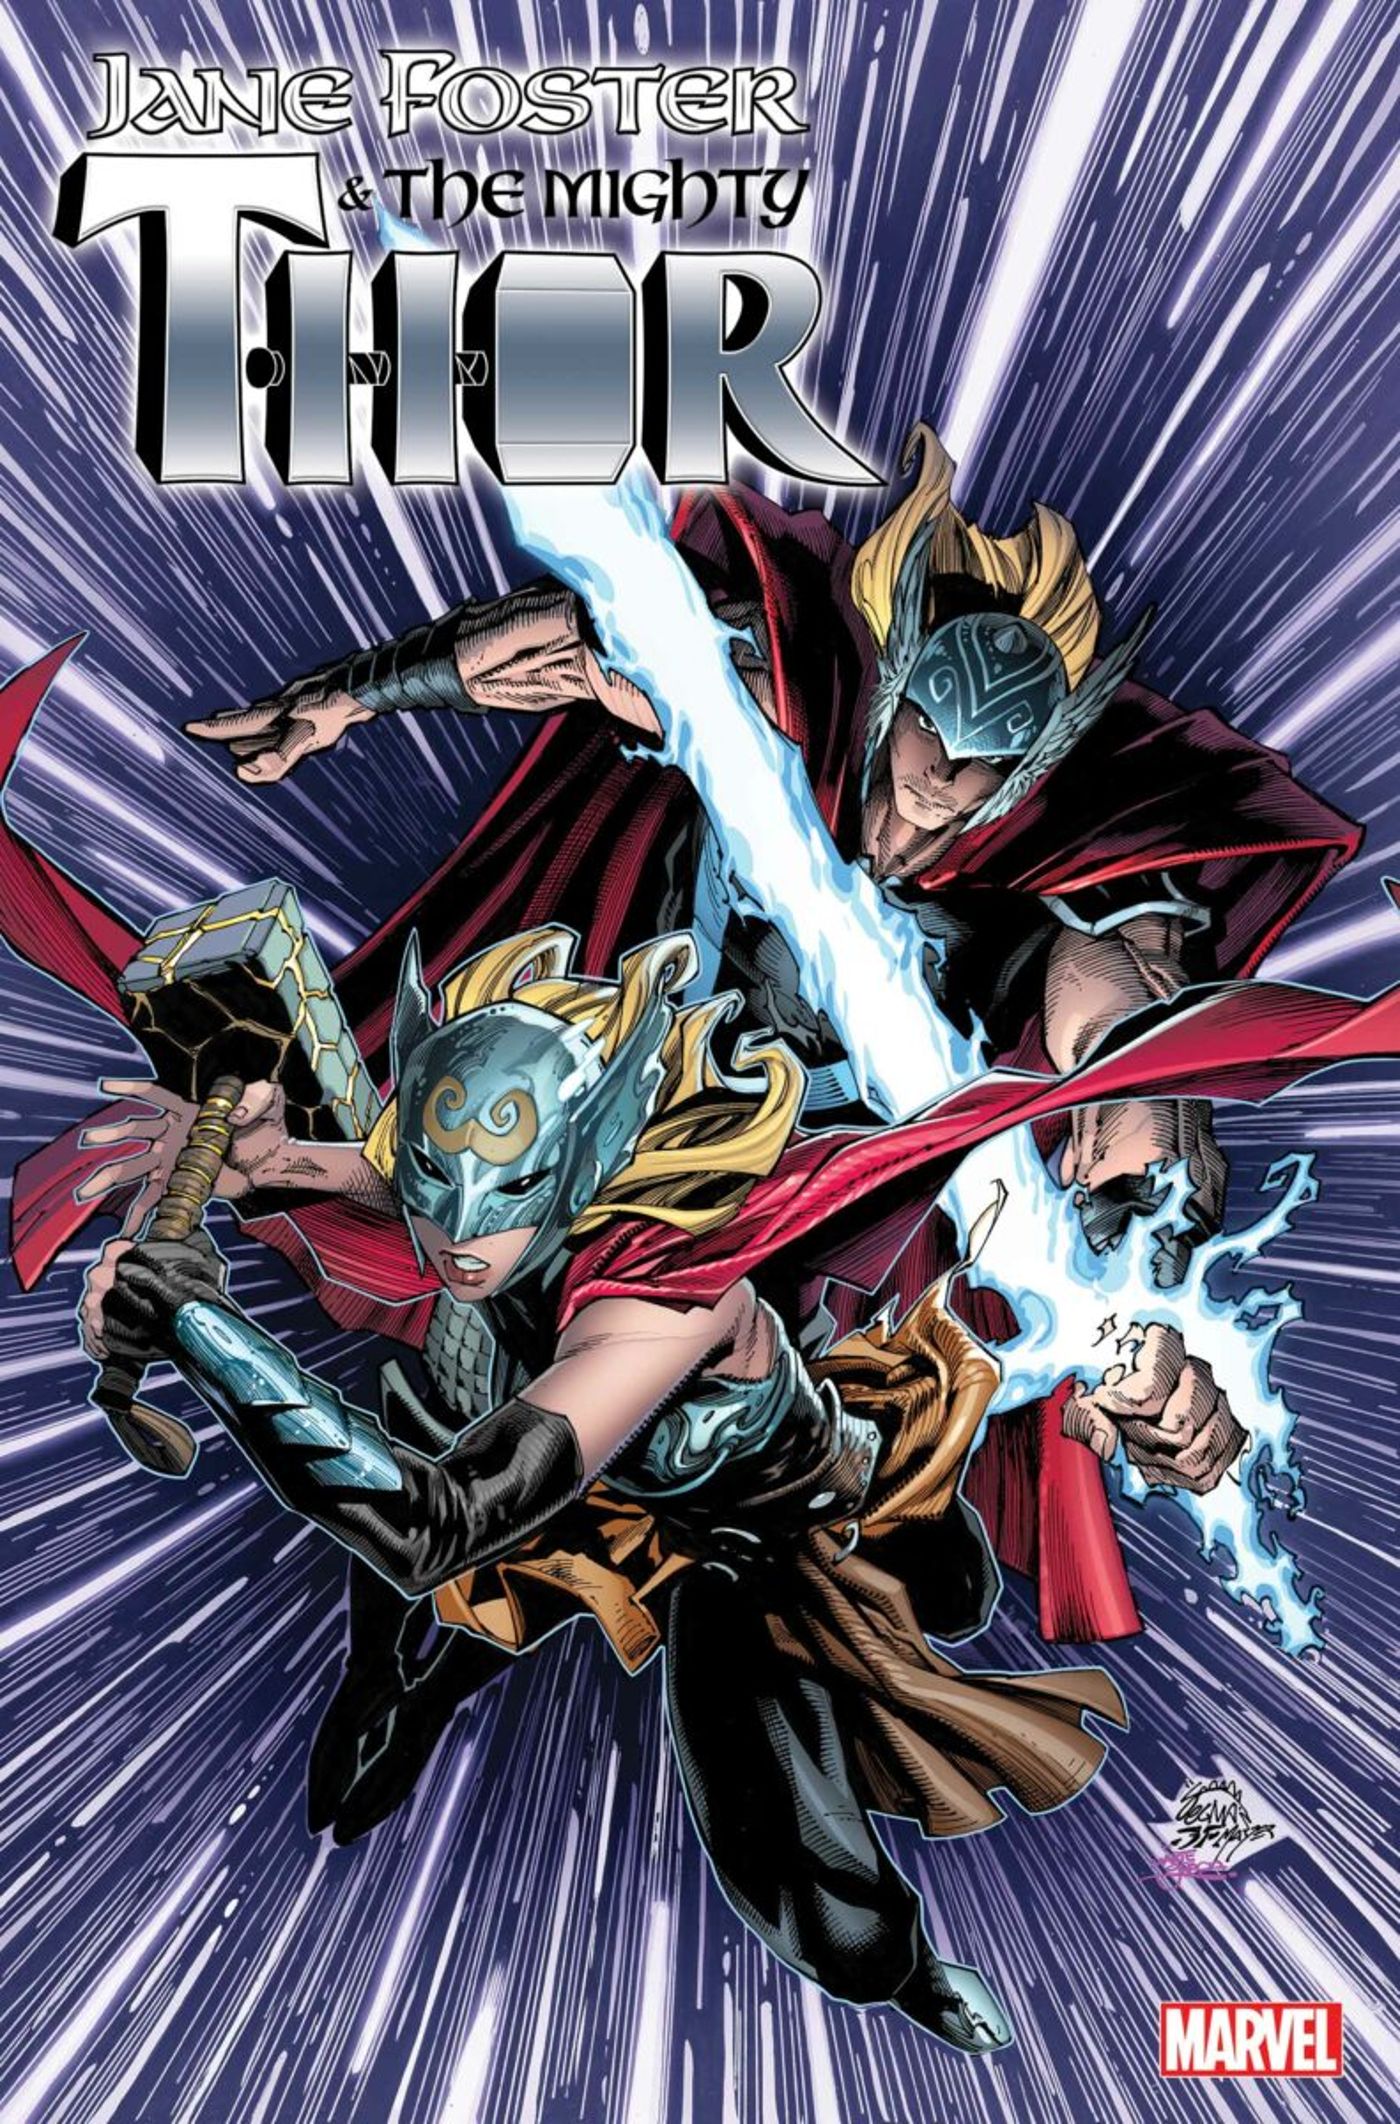 Jane Foster’s Thor Returns to Marvel Comics Ahead of Love & Thunder